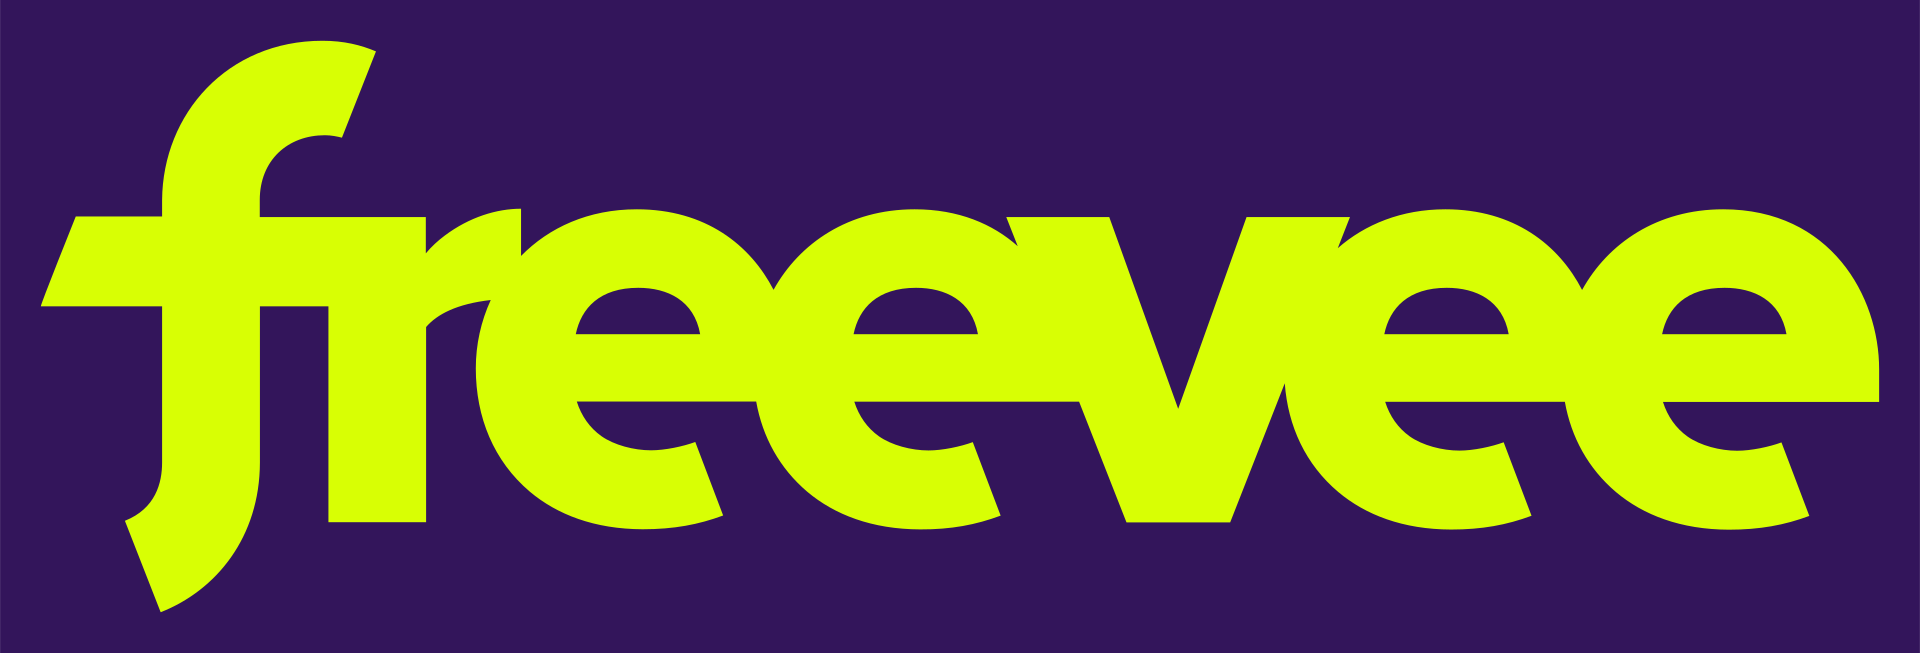 Freevee_logo_background_purple.svg